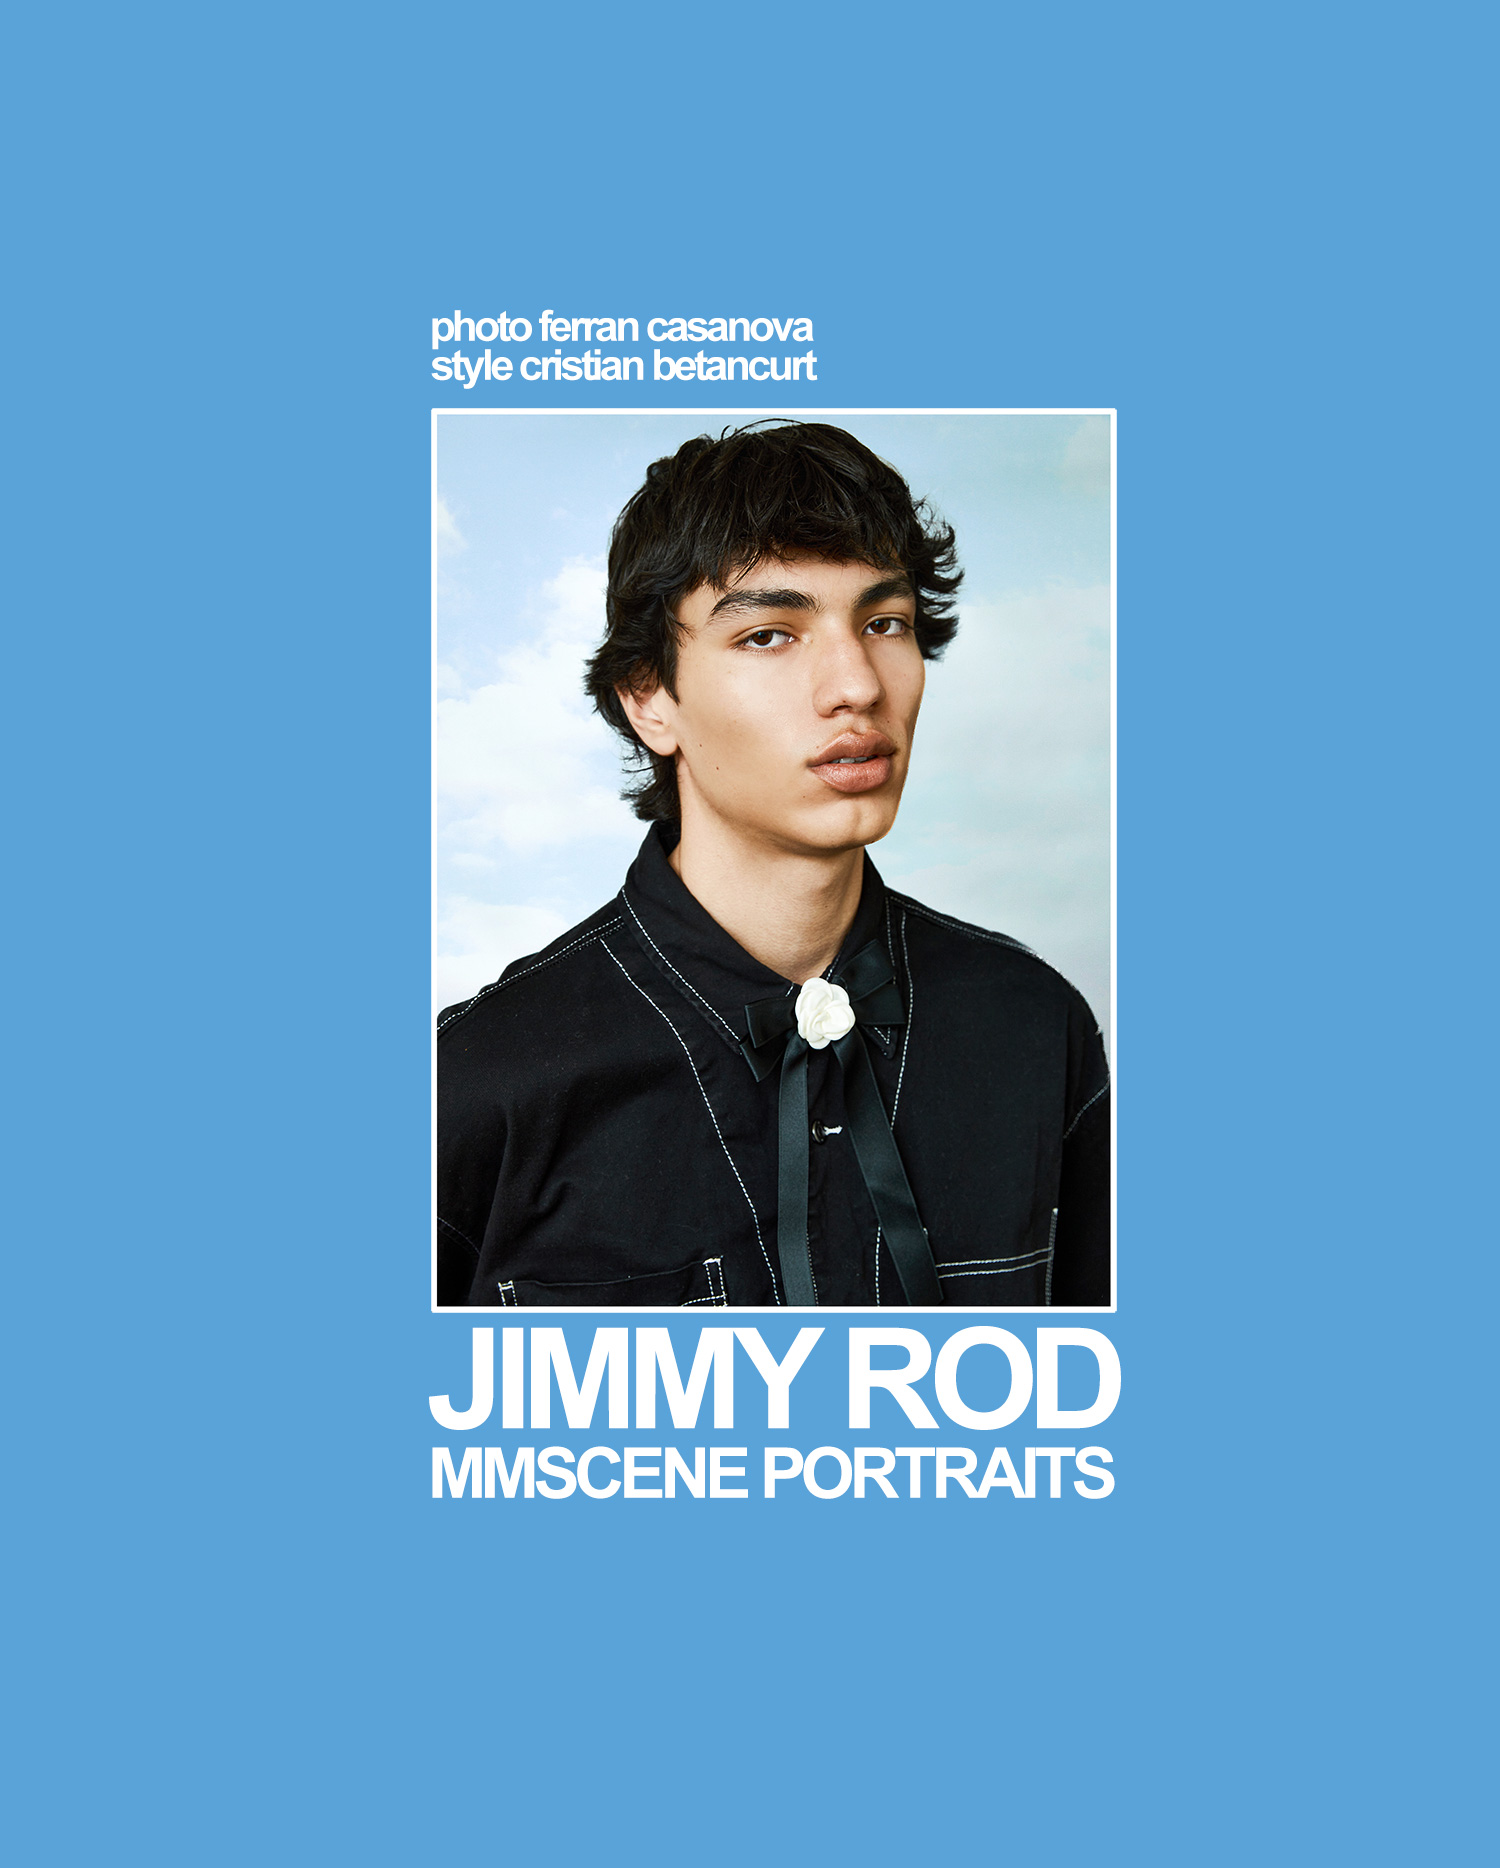 JIMMY ROD by Ferran Casanova for MMSCENE Portraits